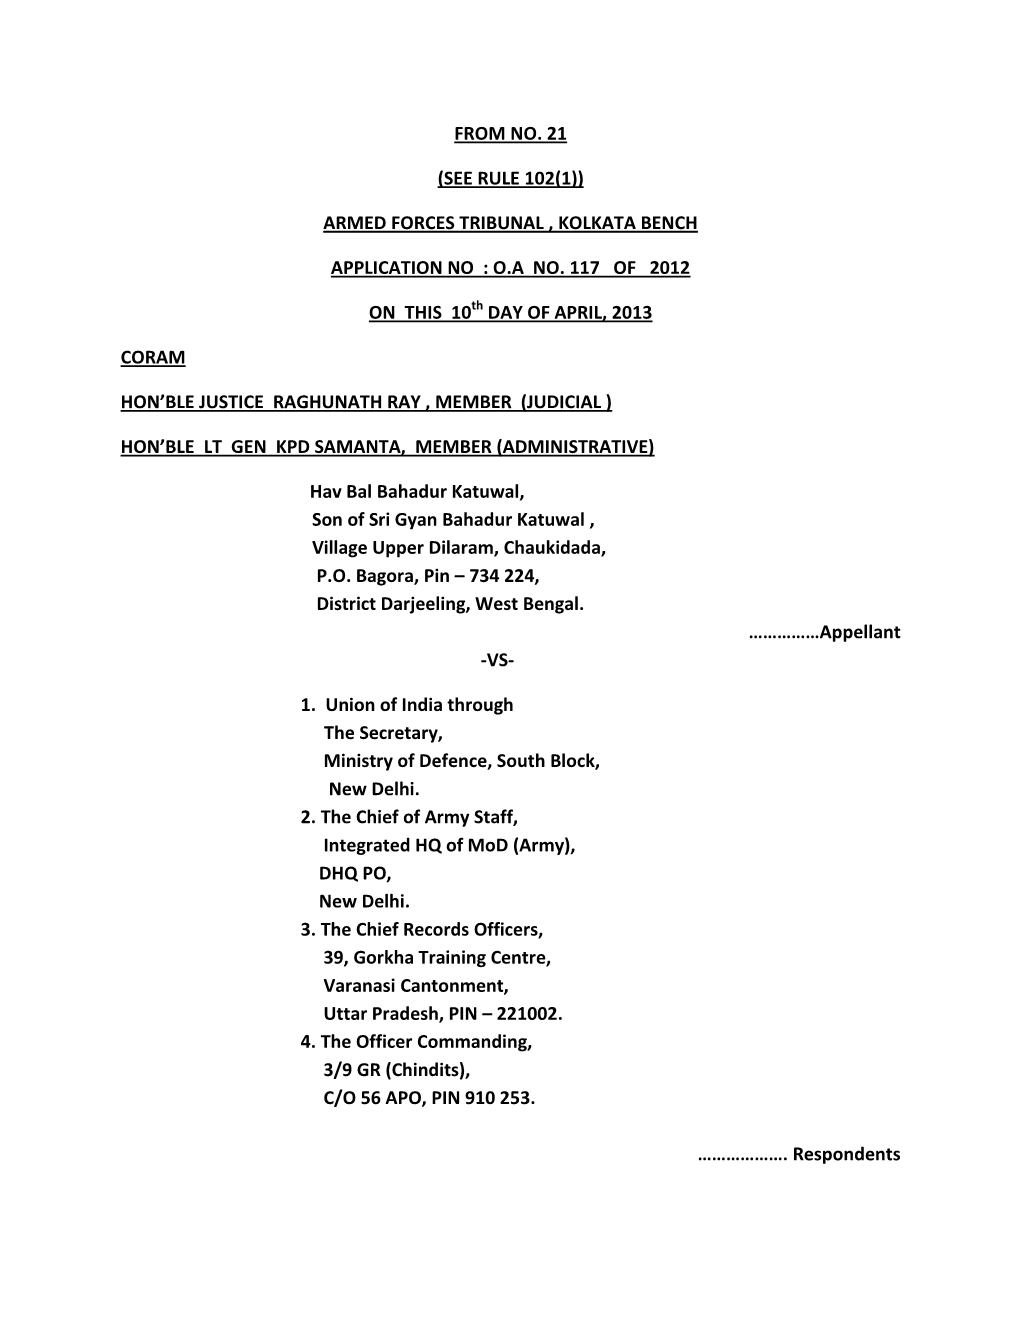 Armed Forces Tribunal , Kolkata Bench Application No